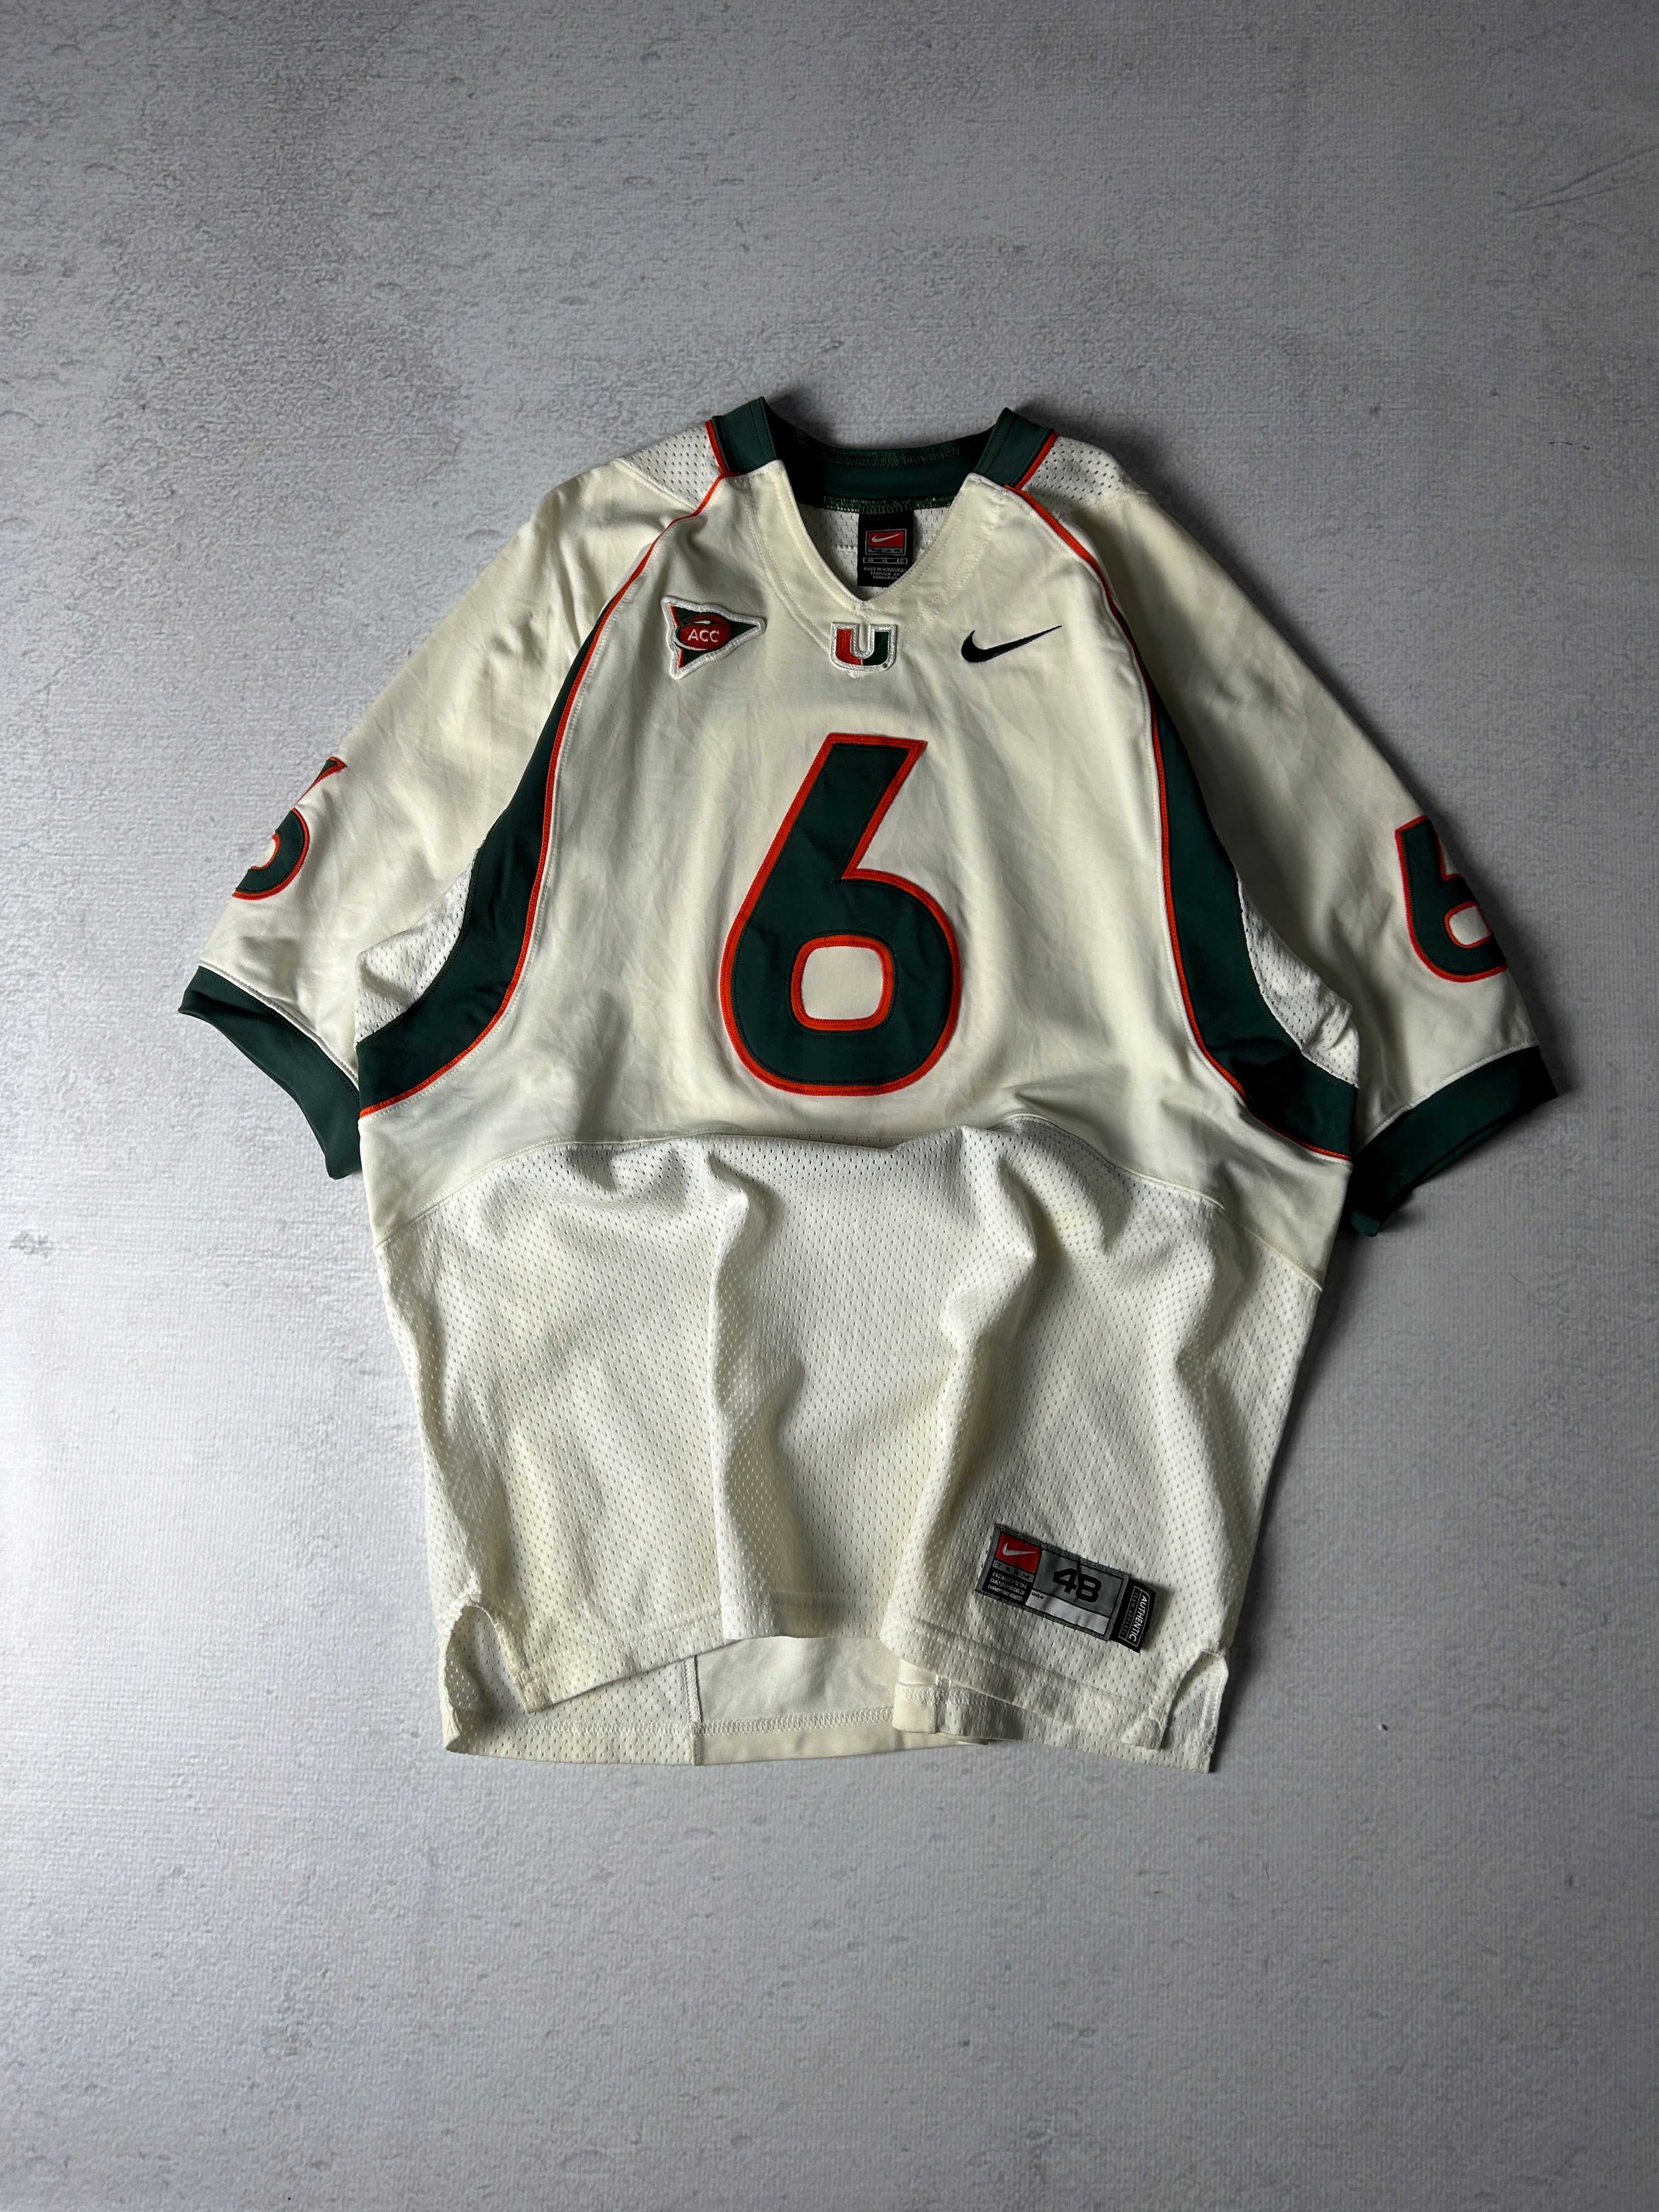 Vintage Nike NCAA University of Miami #6 Jersey - Men's XL